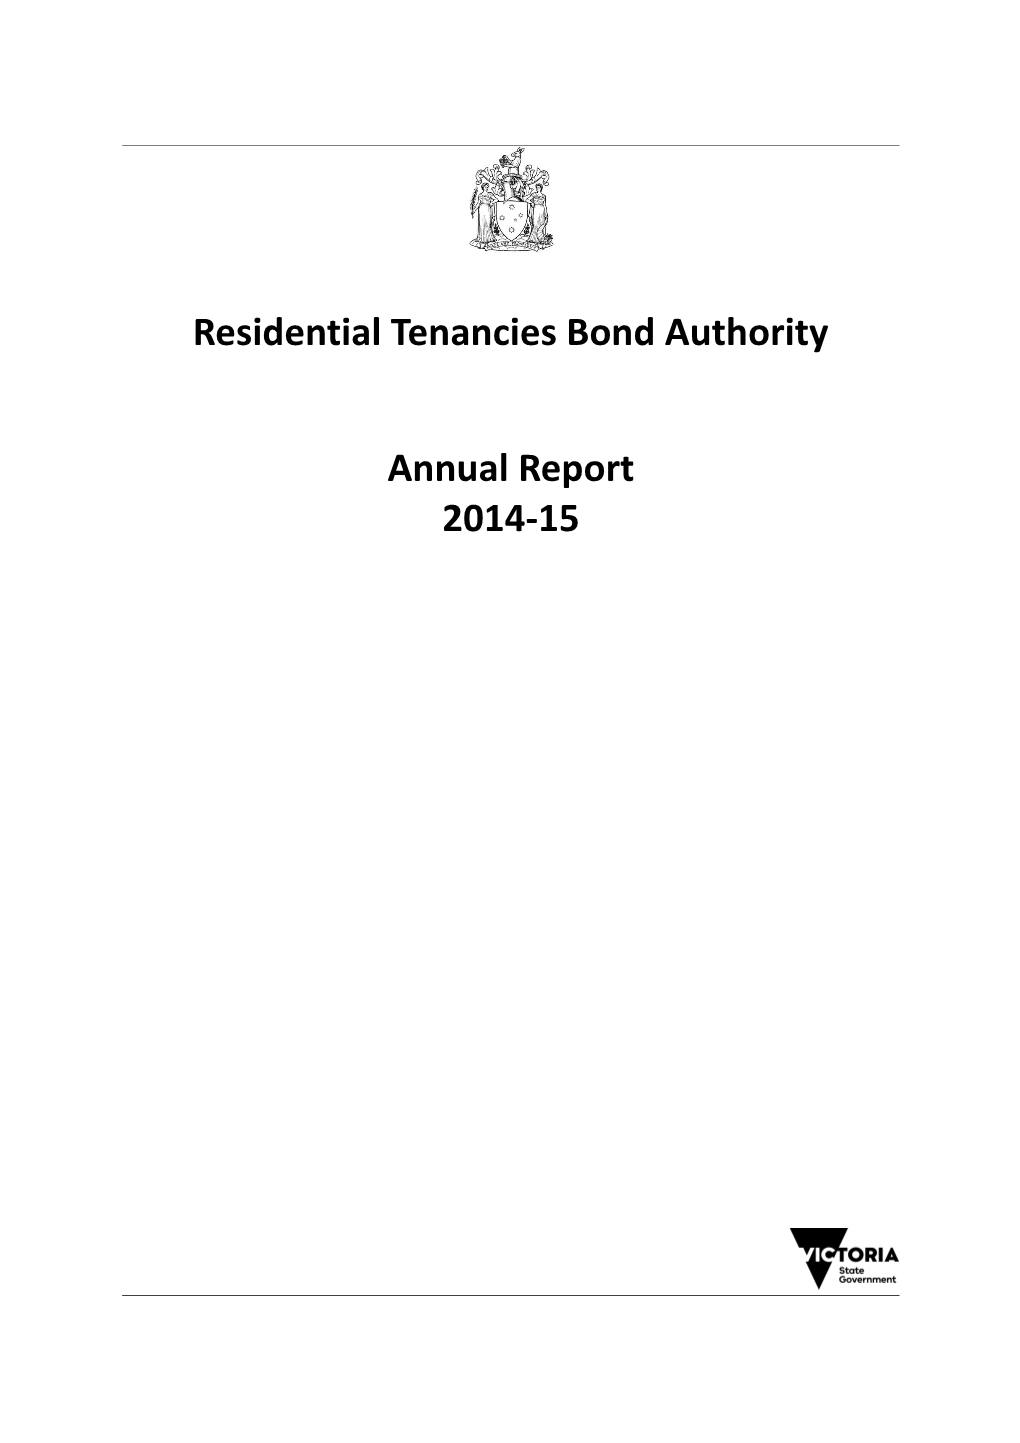 Residential Tenancies Bond Authority: Annual Report 2014-15